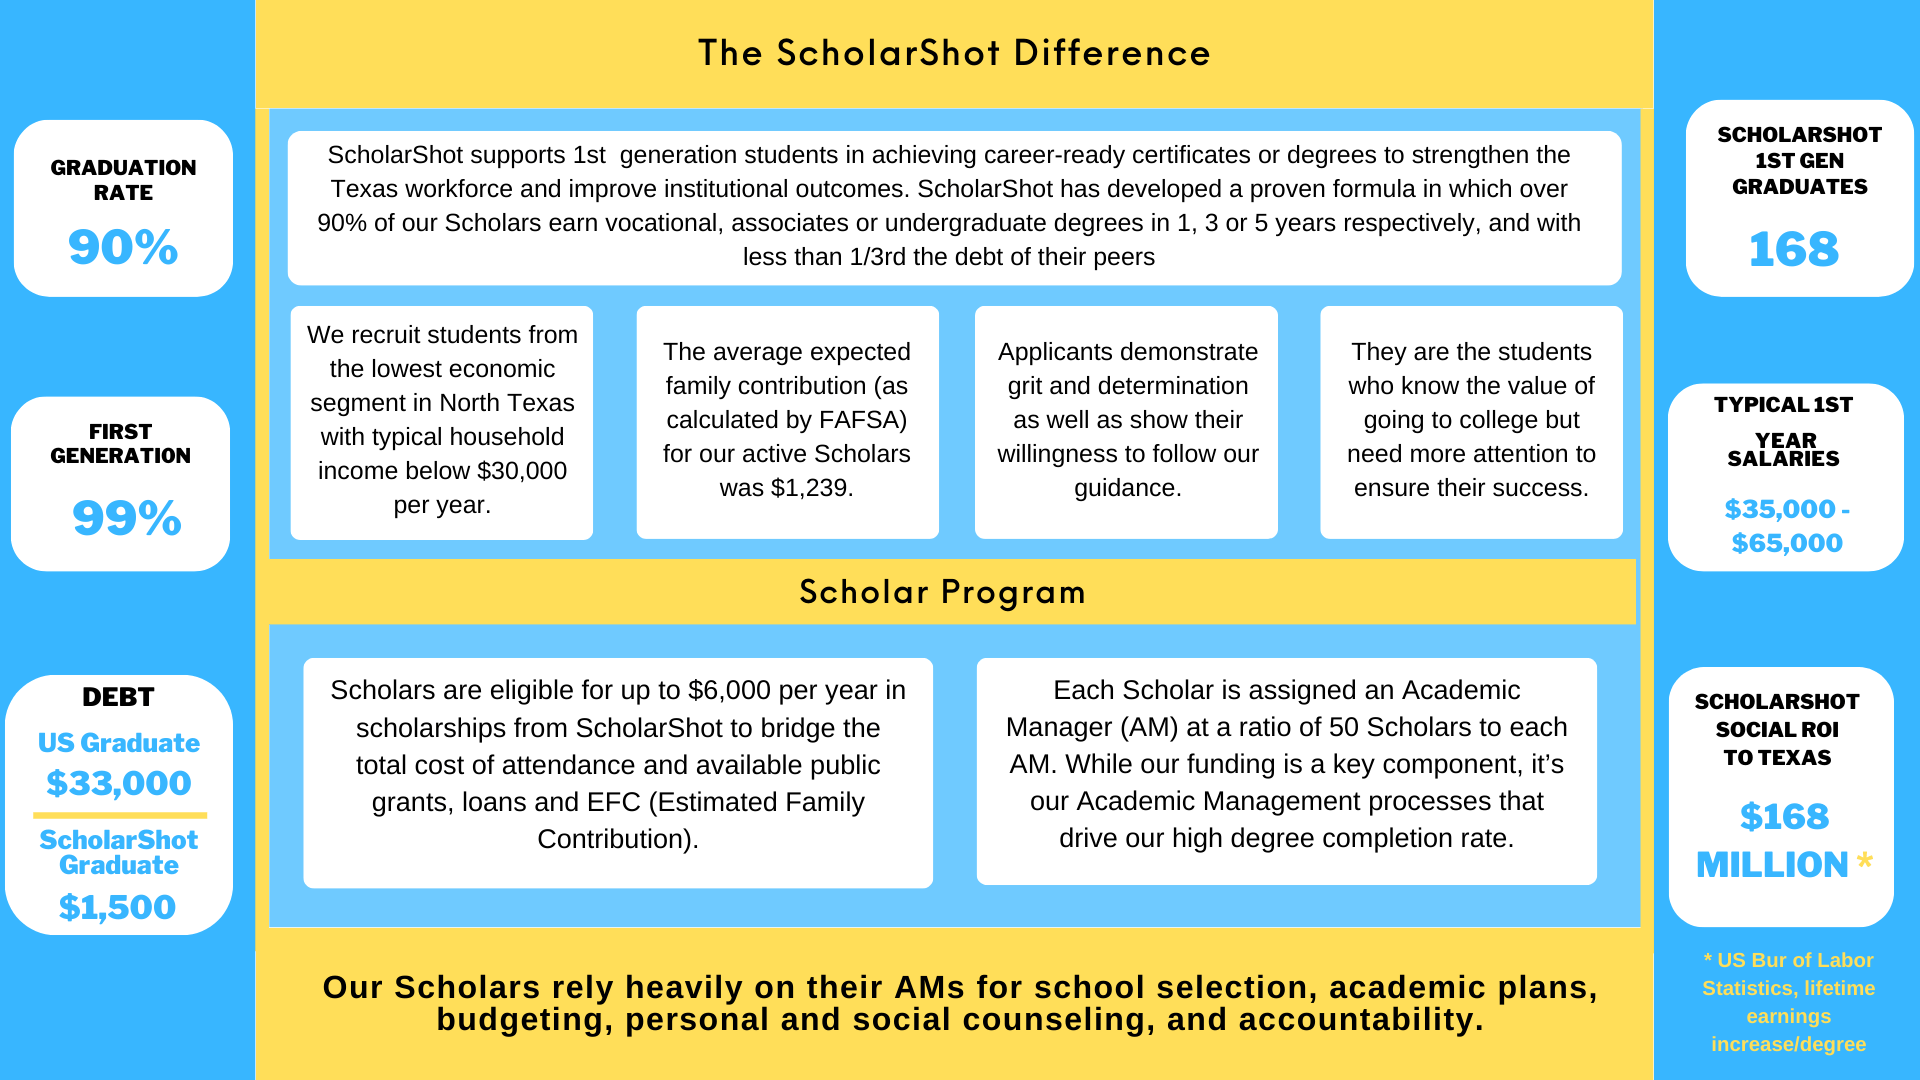 The ScholarShot Difference Scholar Program